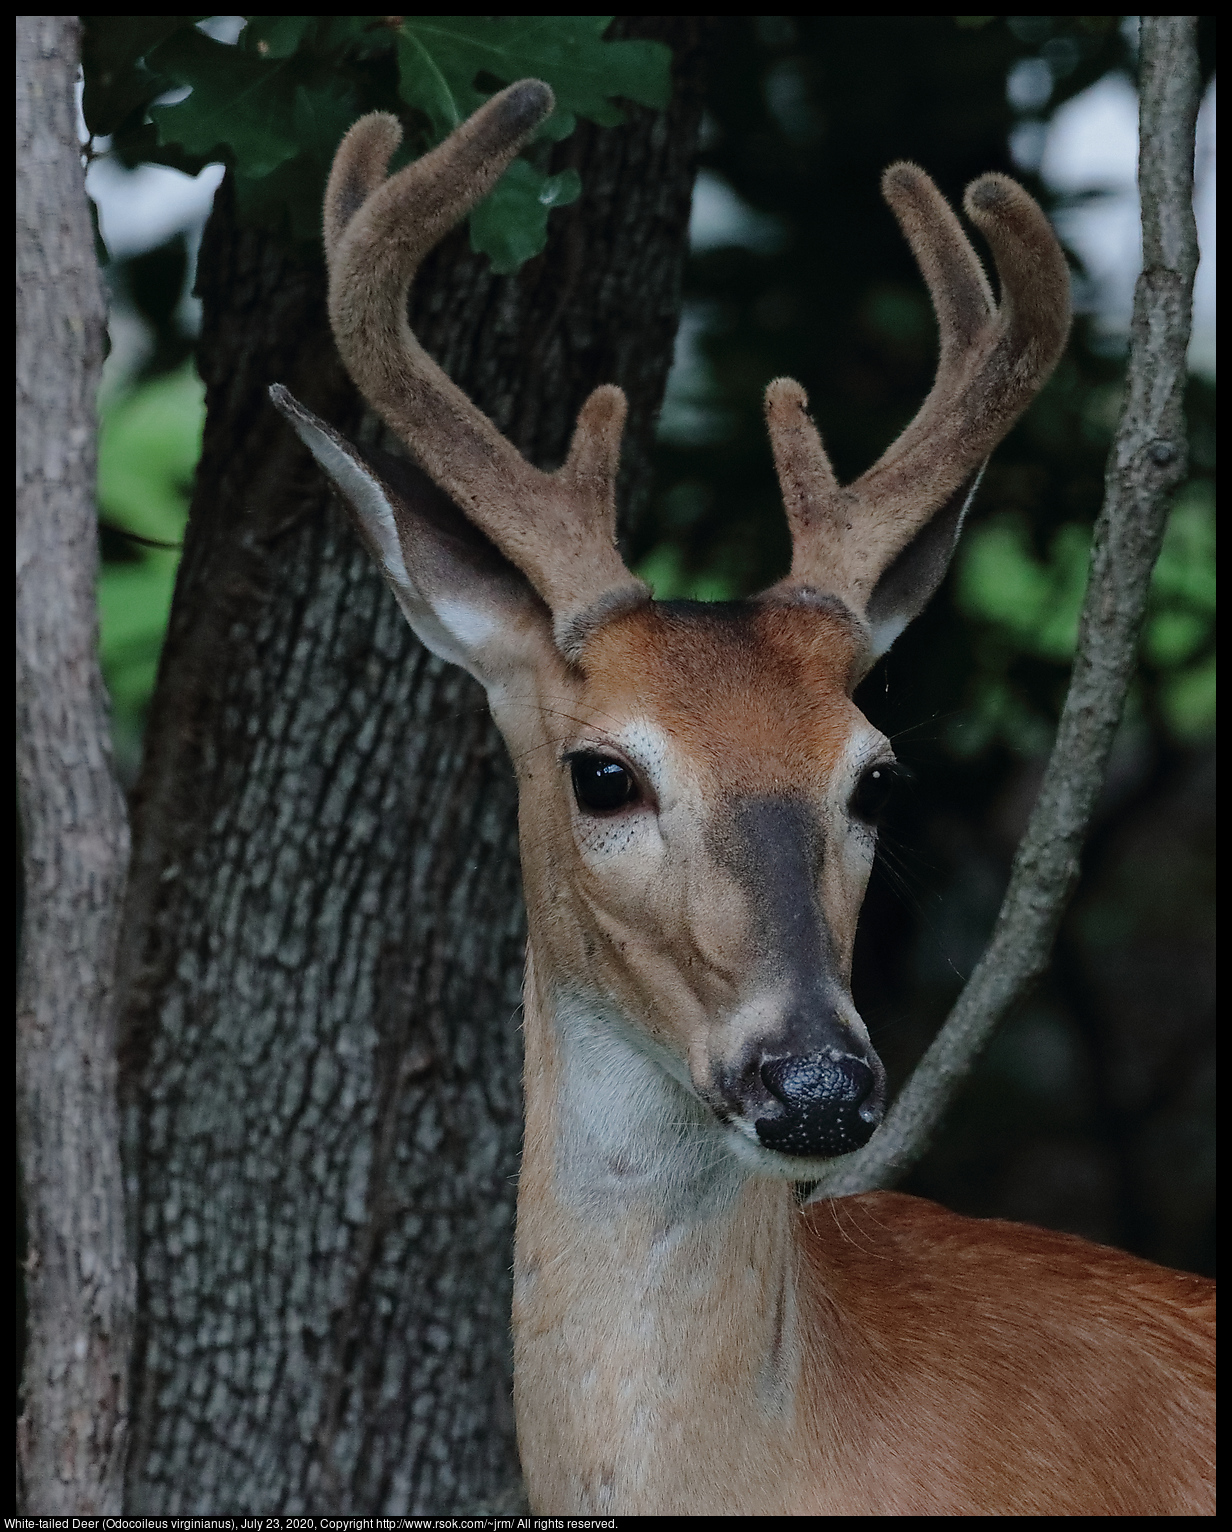 White-tailed Deer (Odocoileus virginianus), July 23, 2020